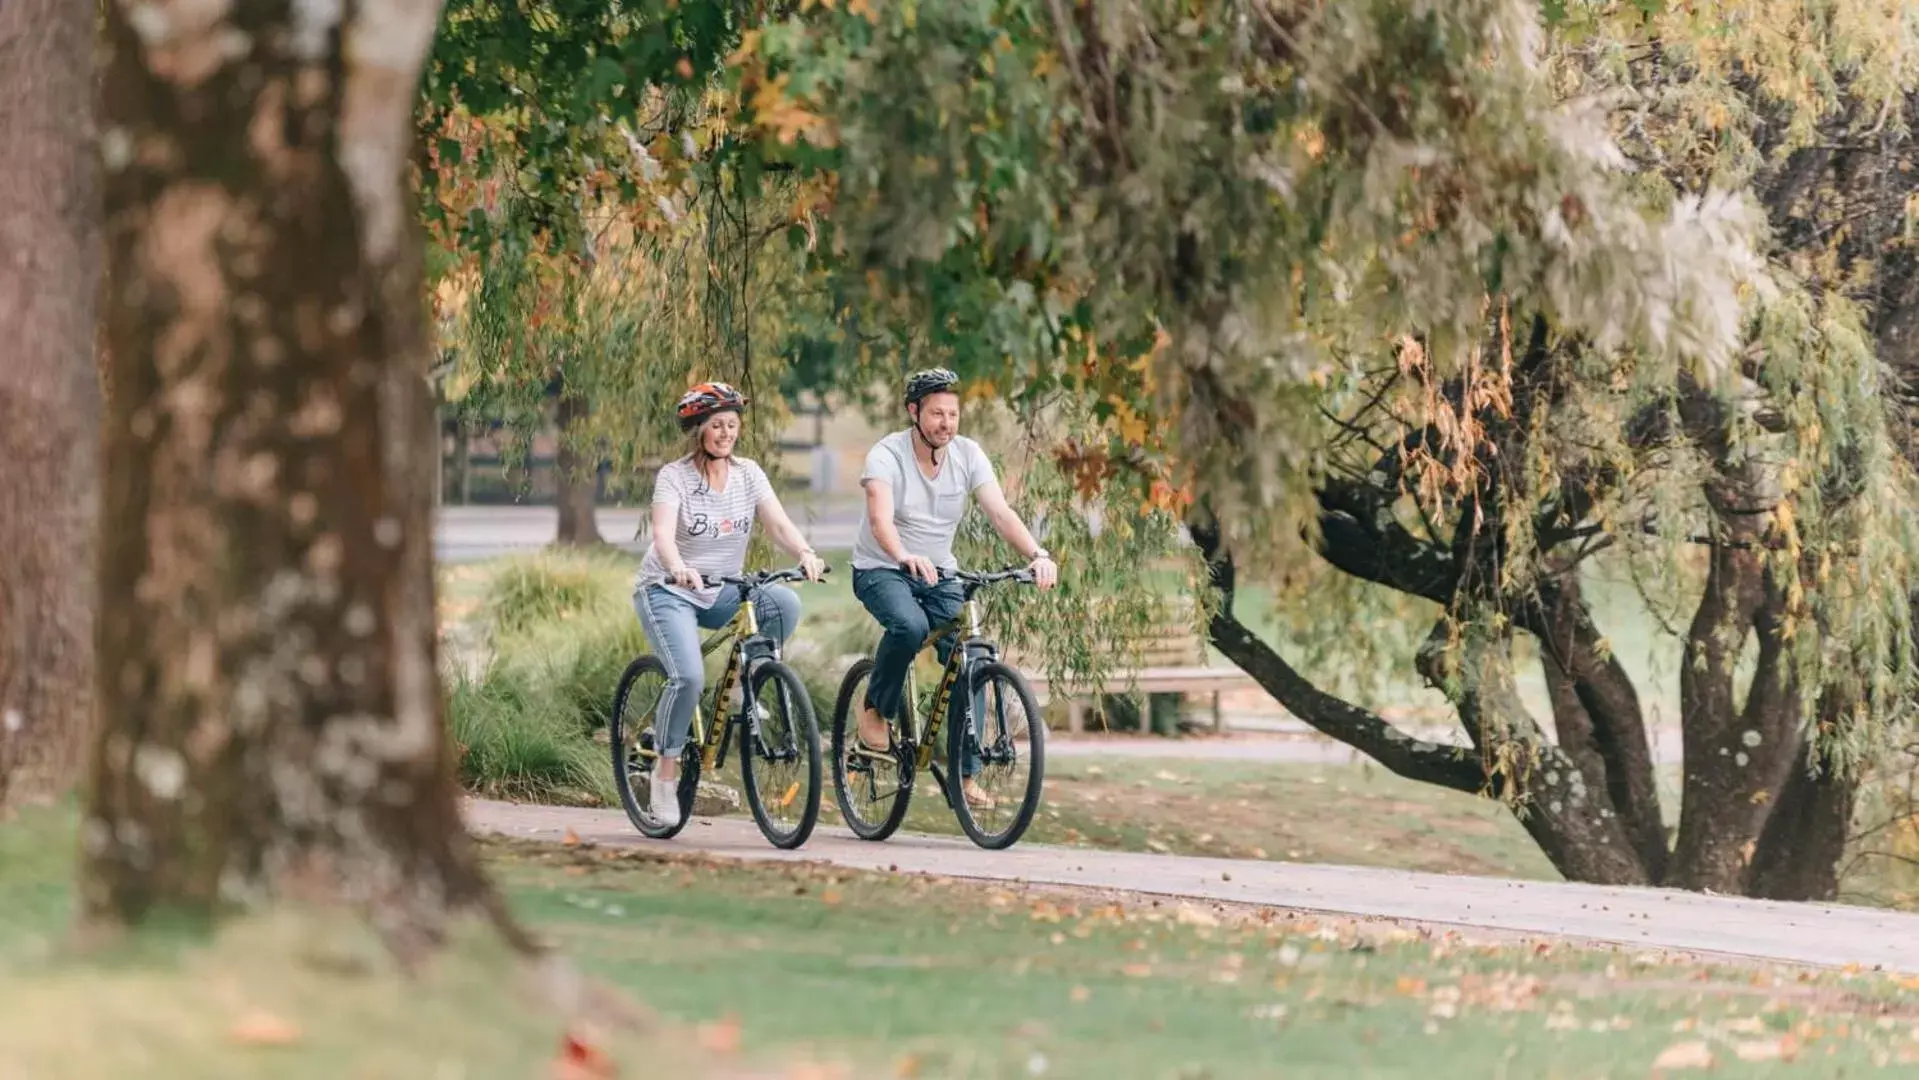 Cycling, Biking in Country Club Villas